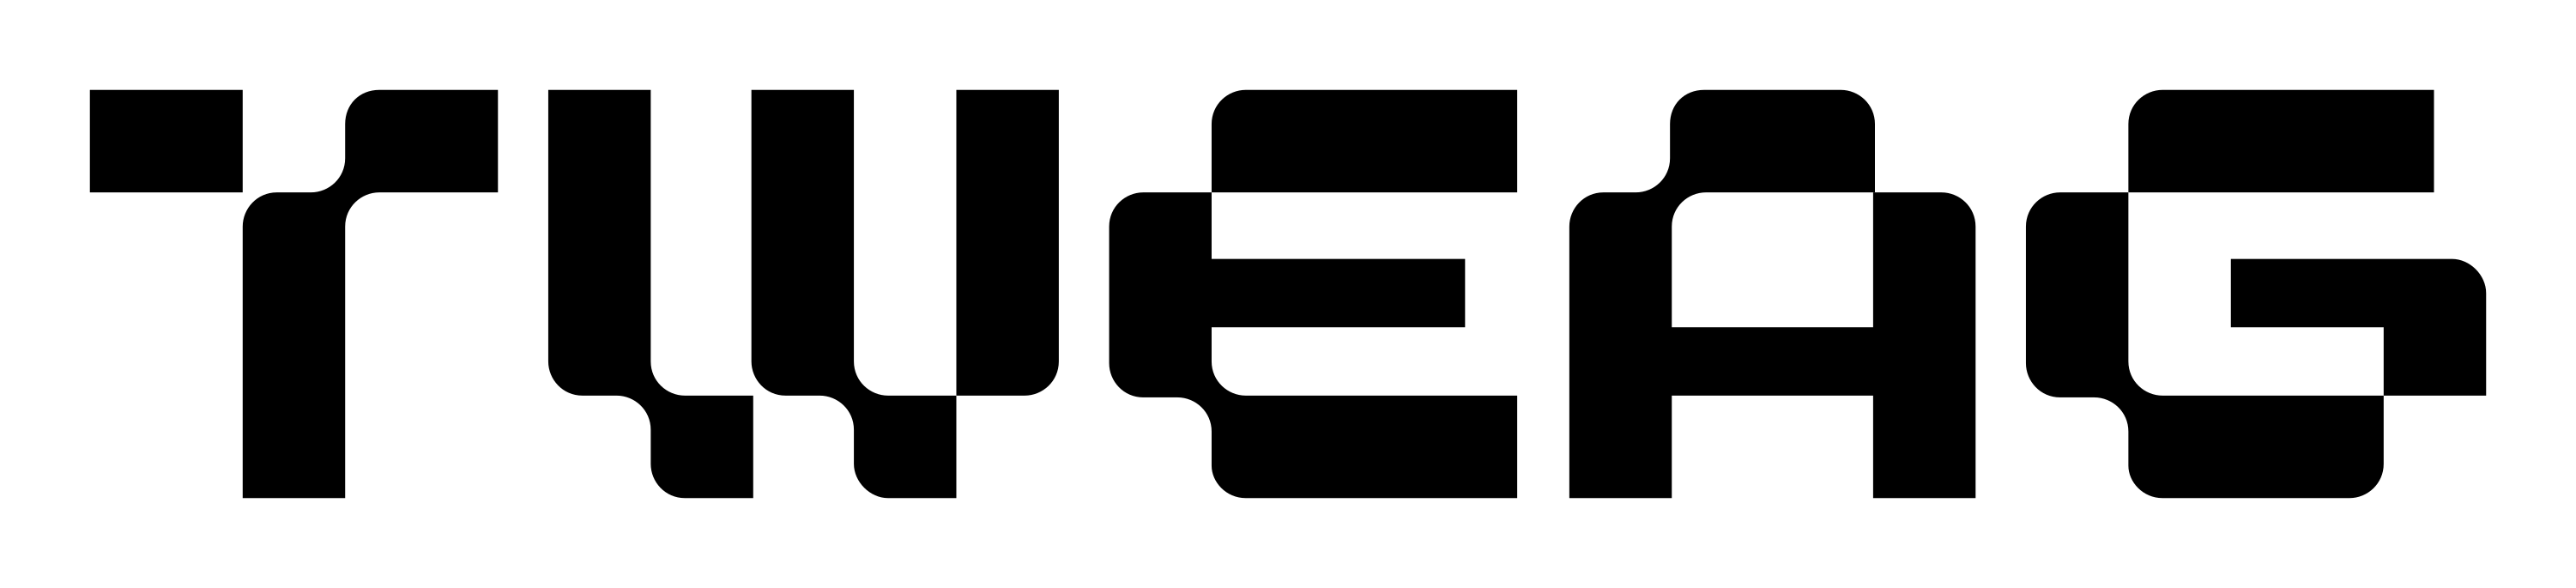 Tweag logo